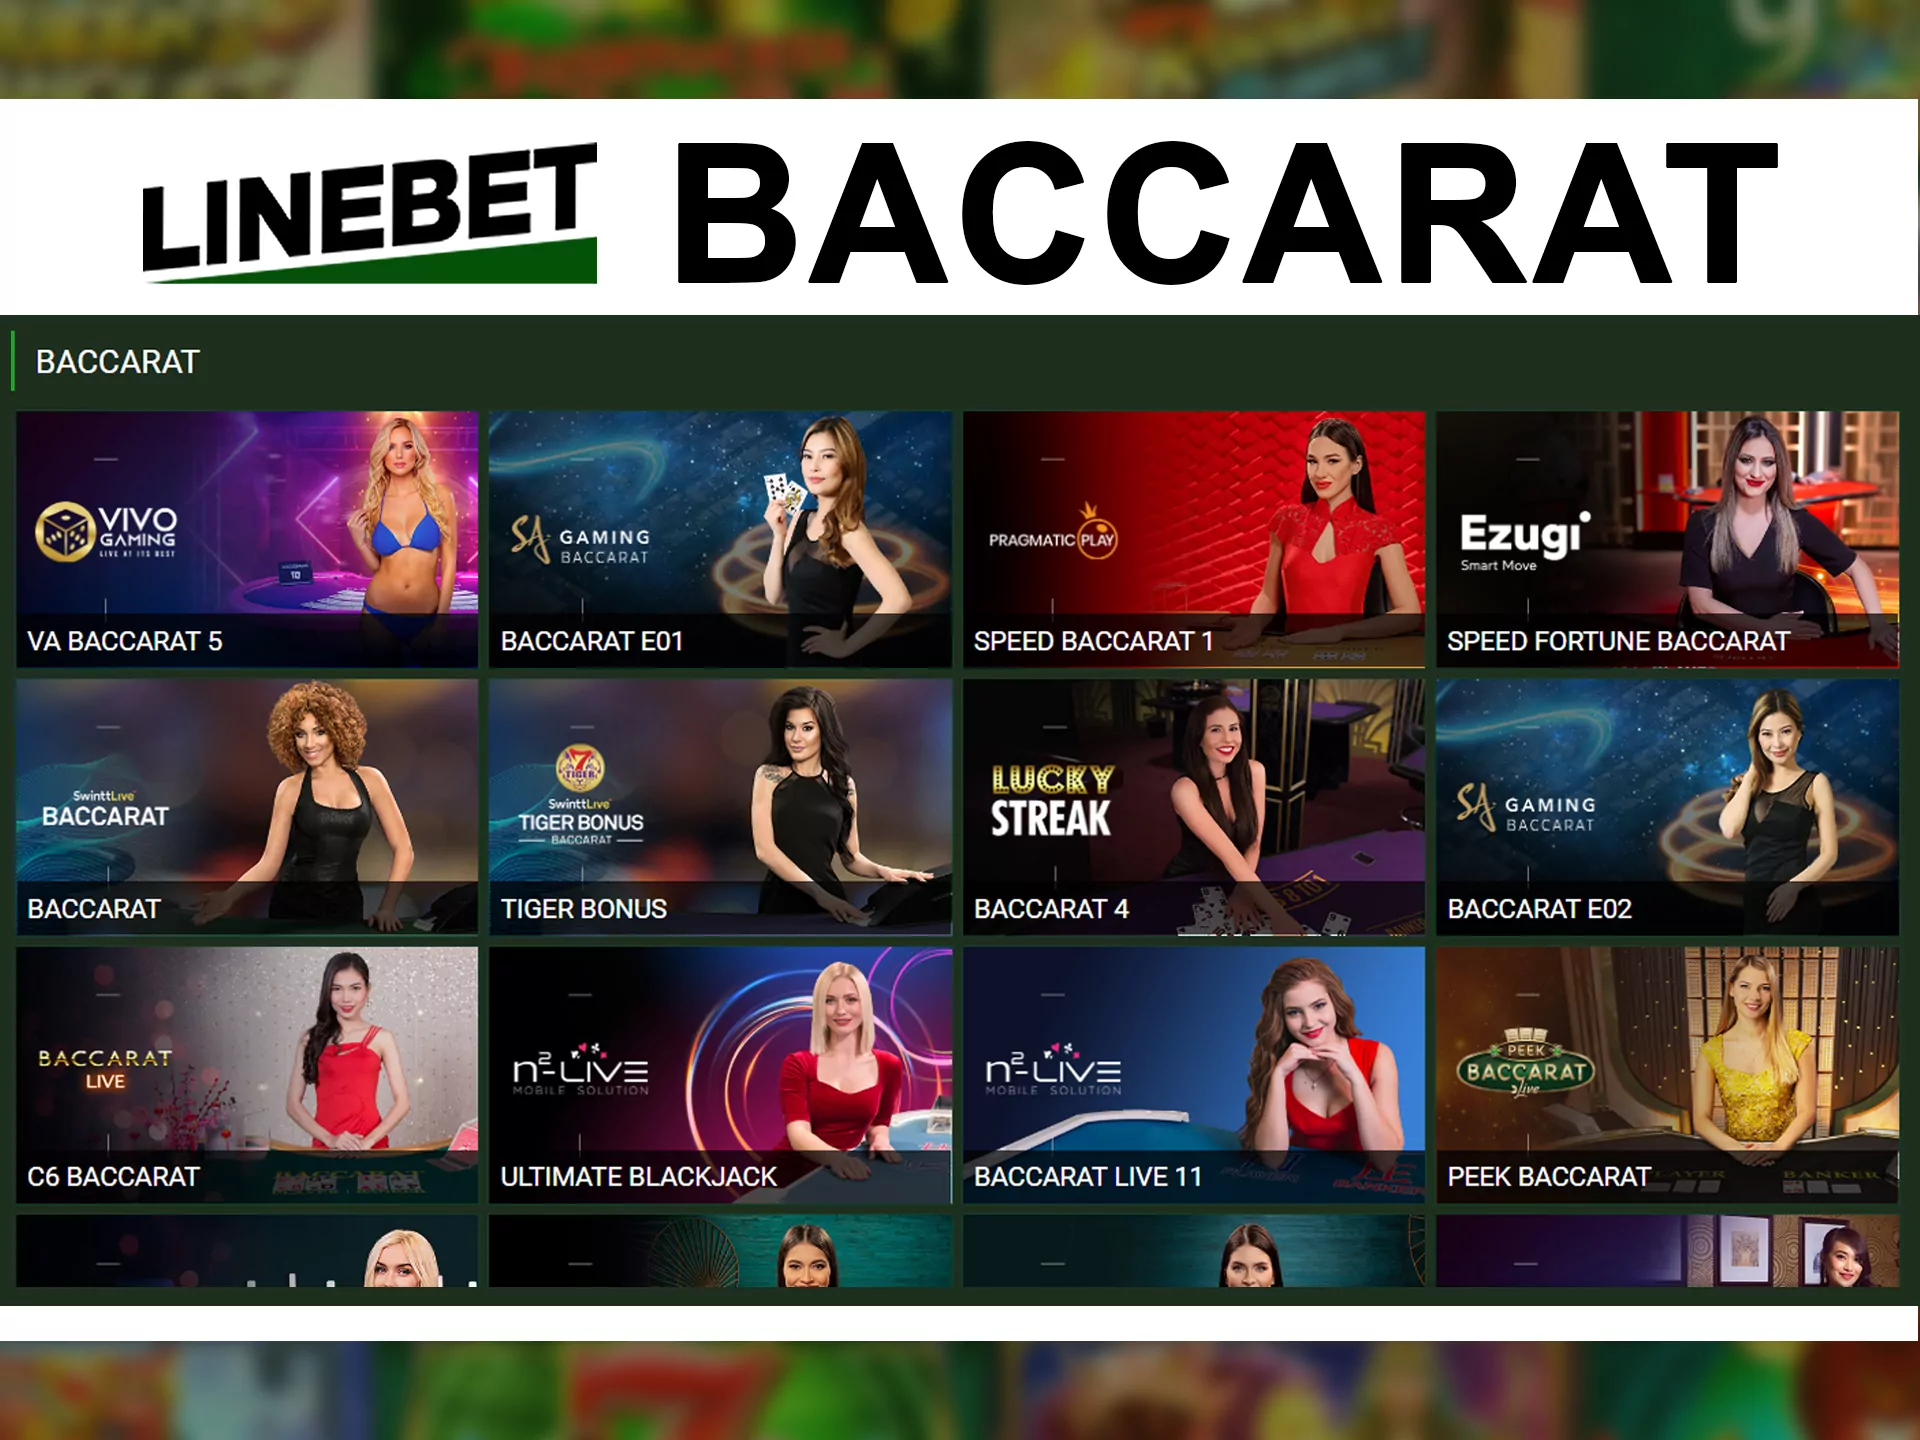 Play baccarat at Linebet.